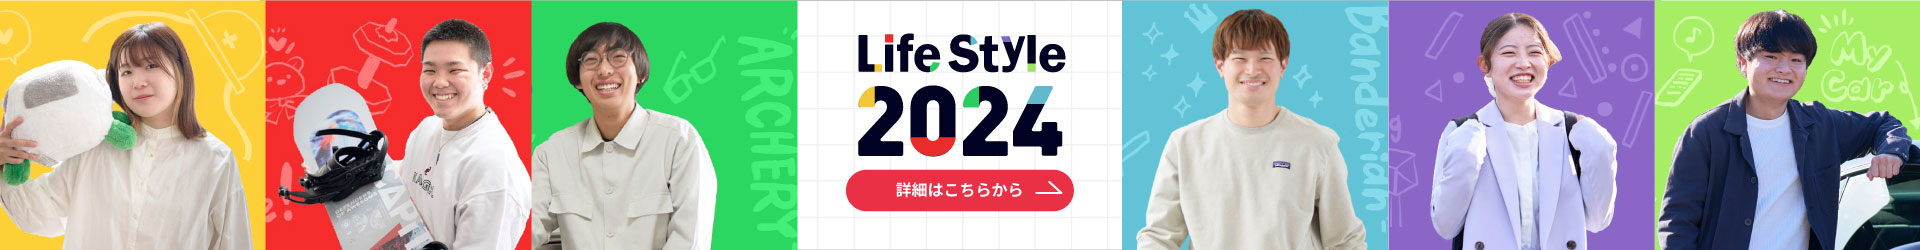 lifestyle 2024バナー